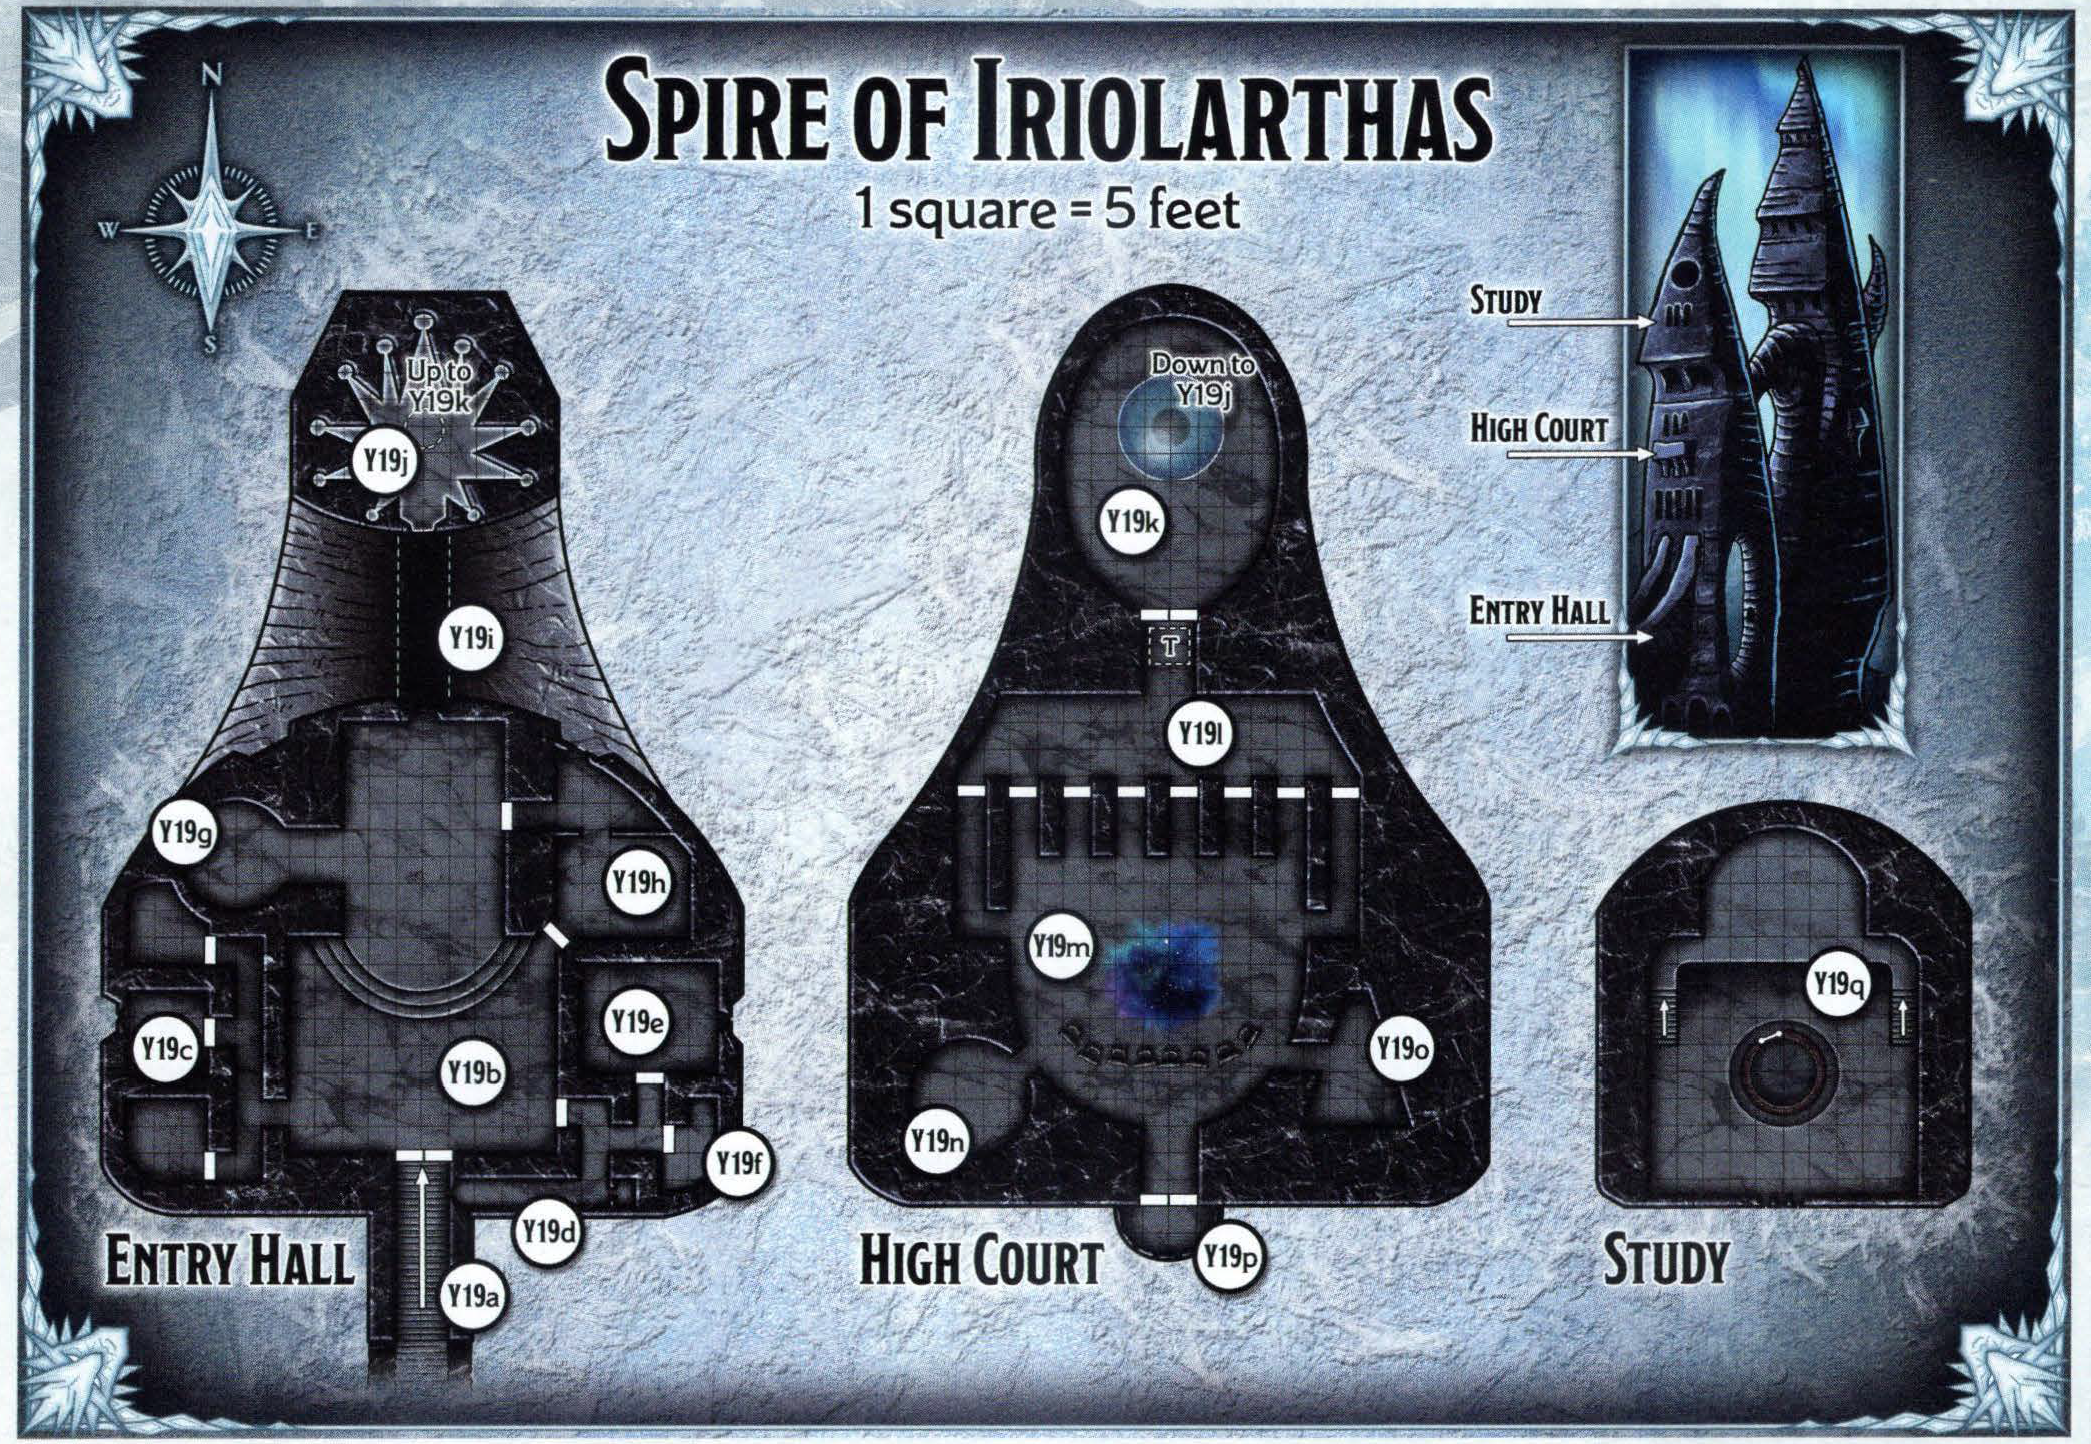 Spire of Iriolarthas - Map and Inset